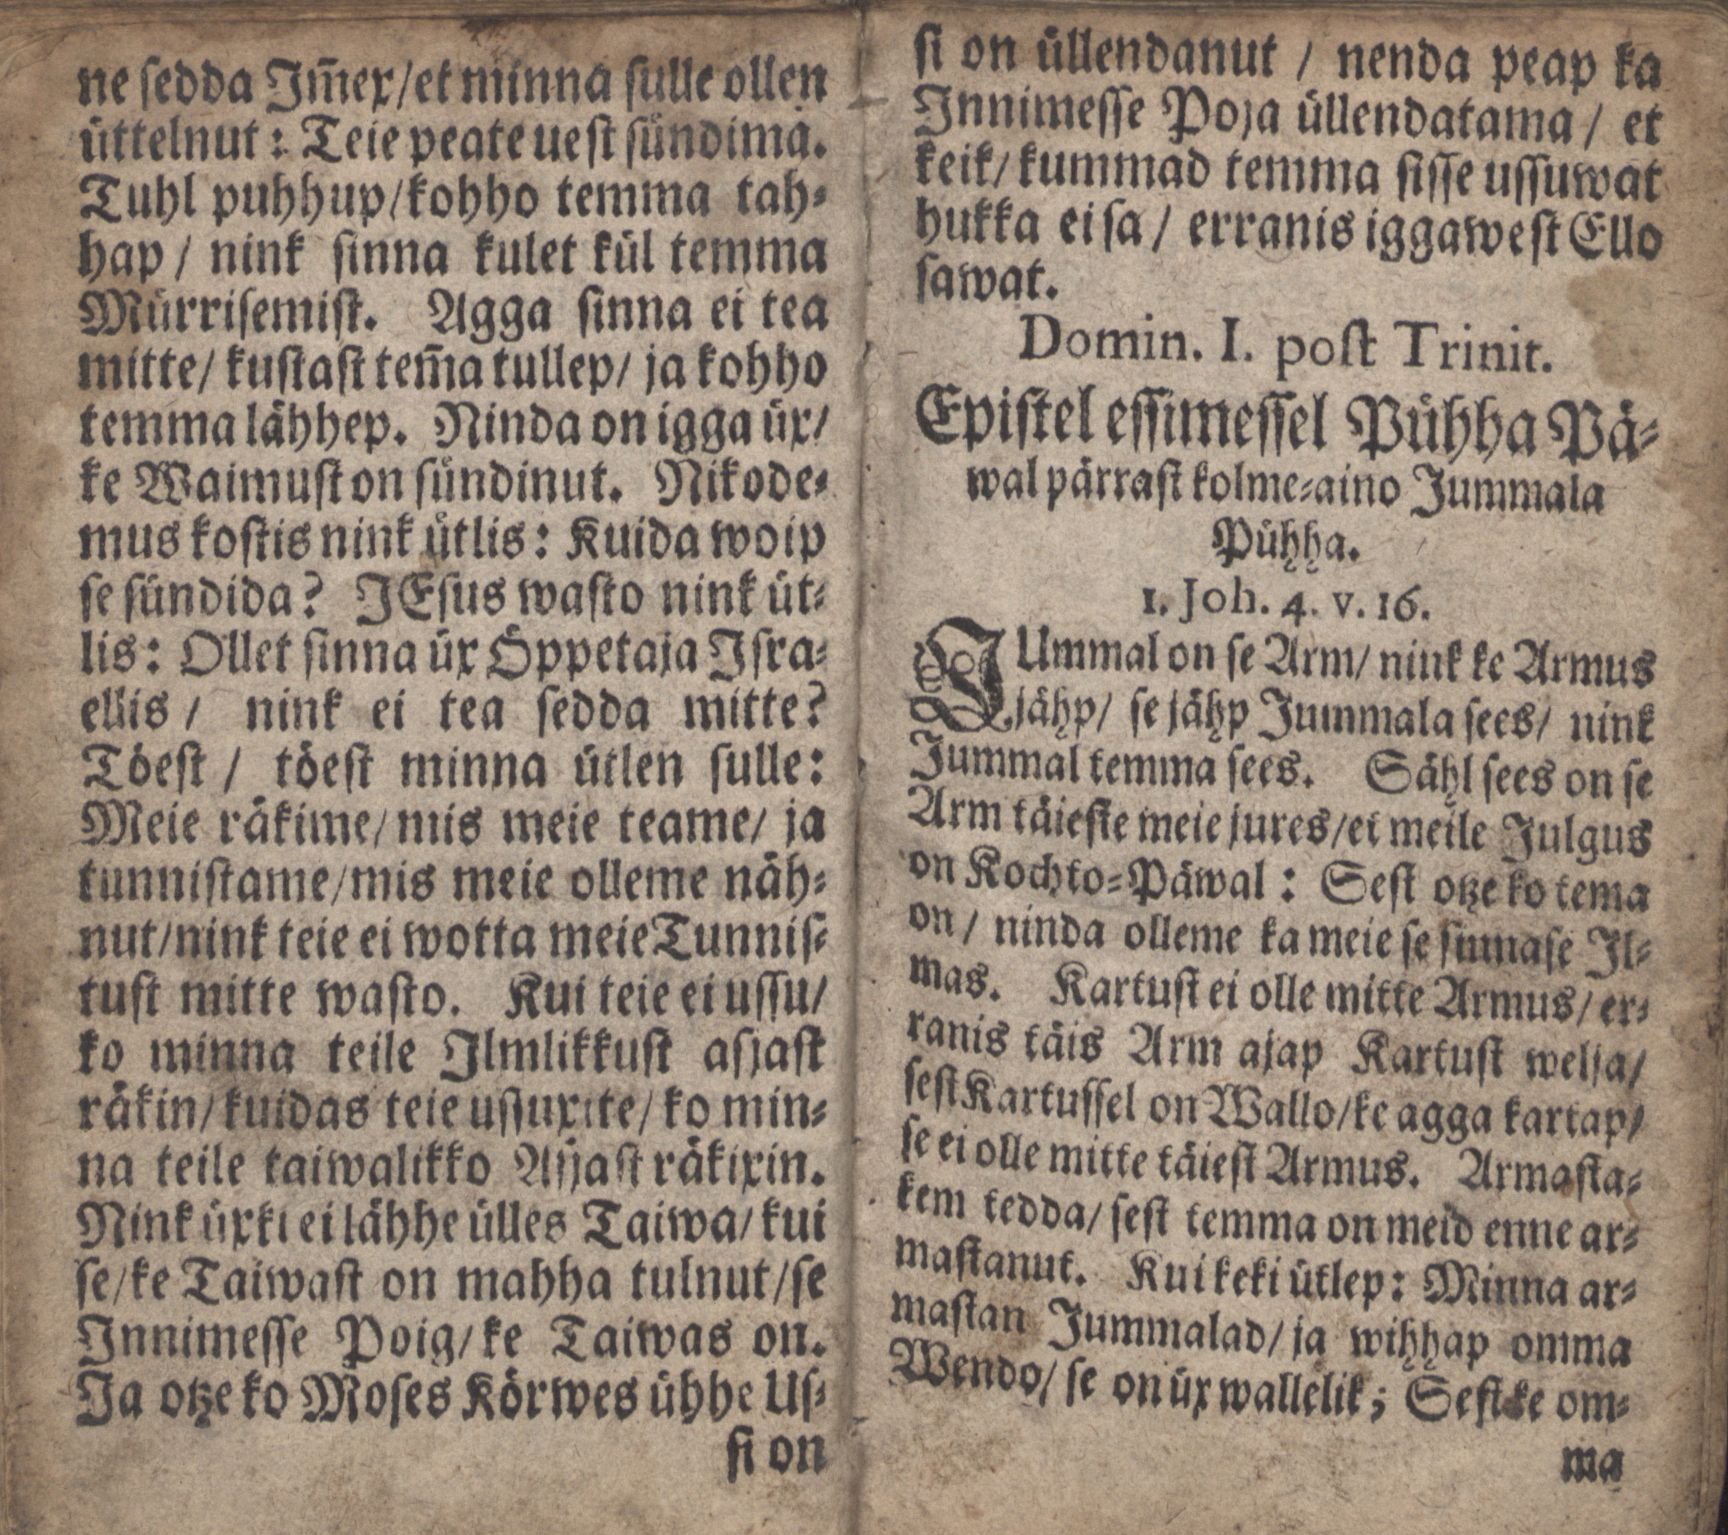 Ewangeliummit Nink Epistlit (1700) | 57. Main body of text